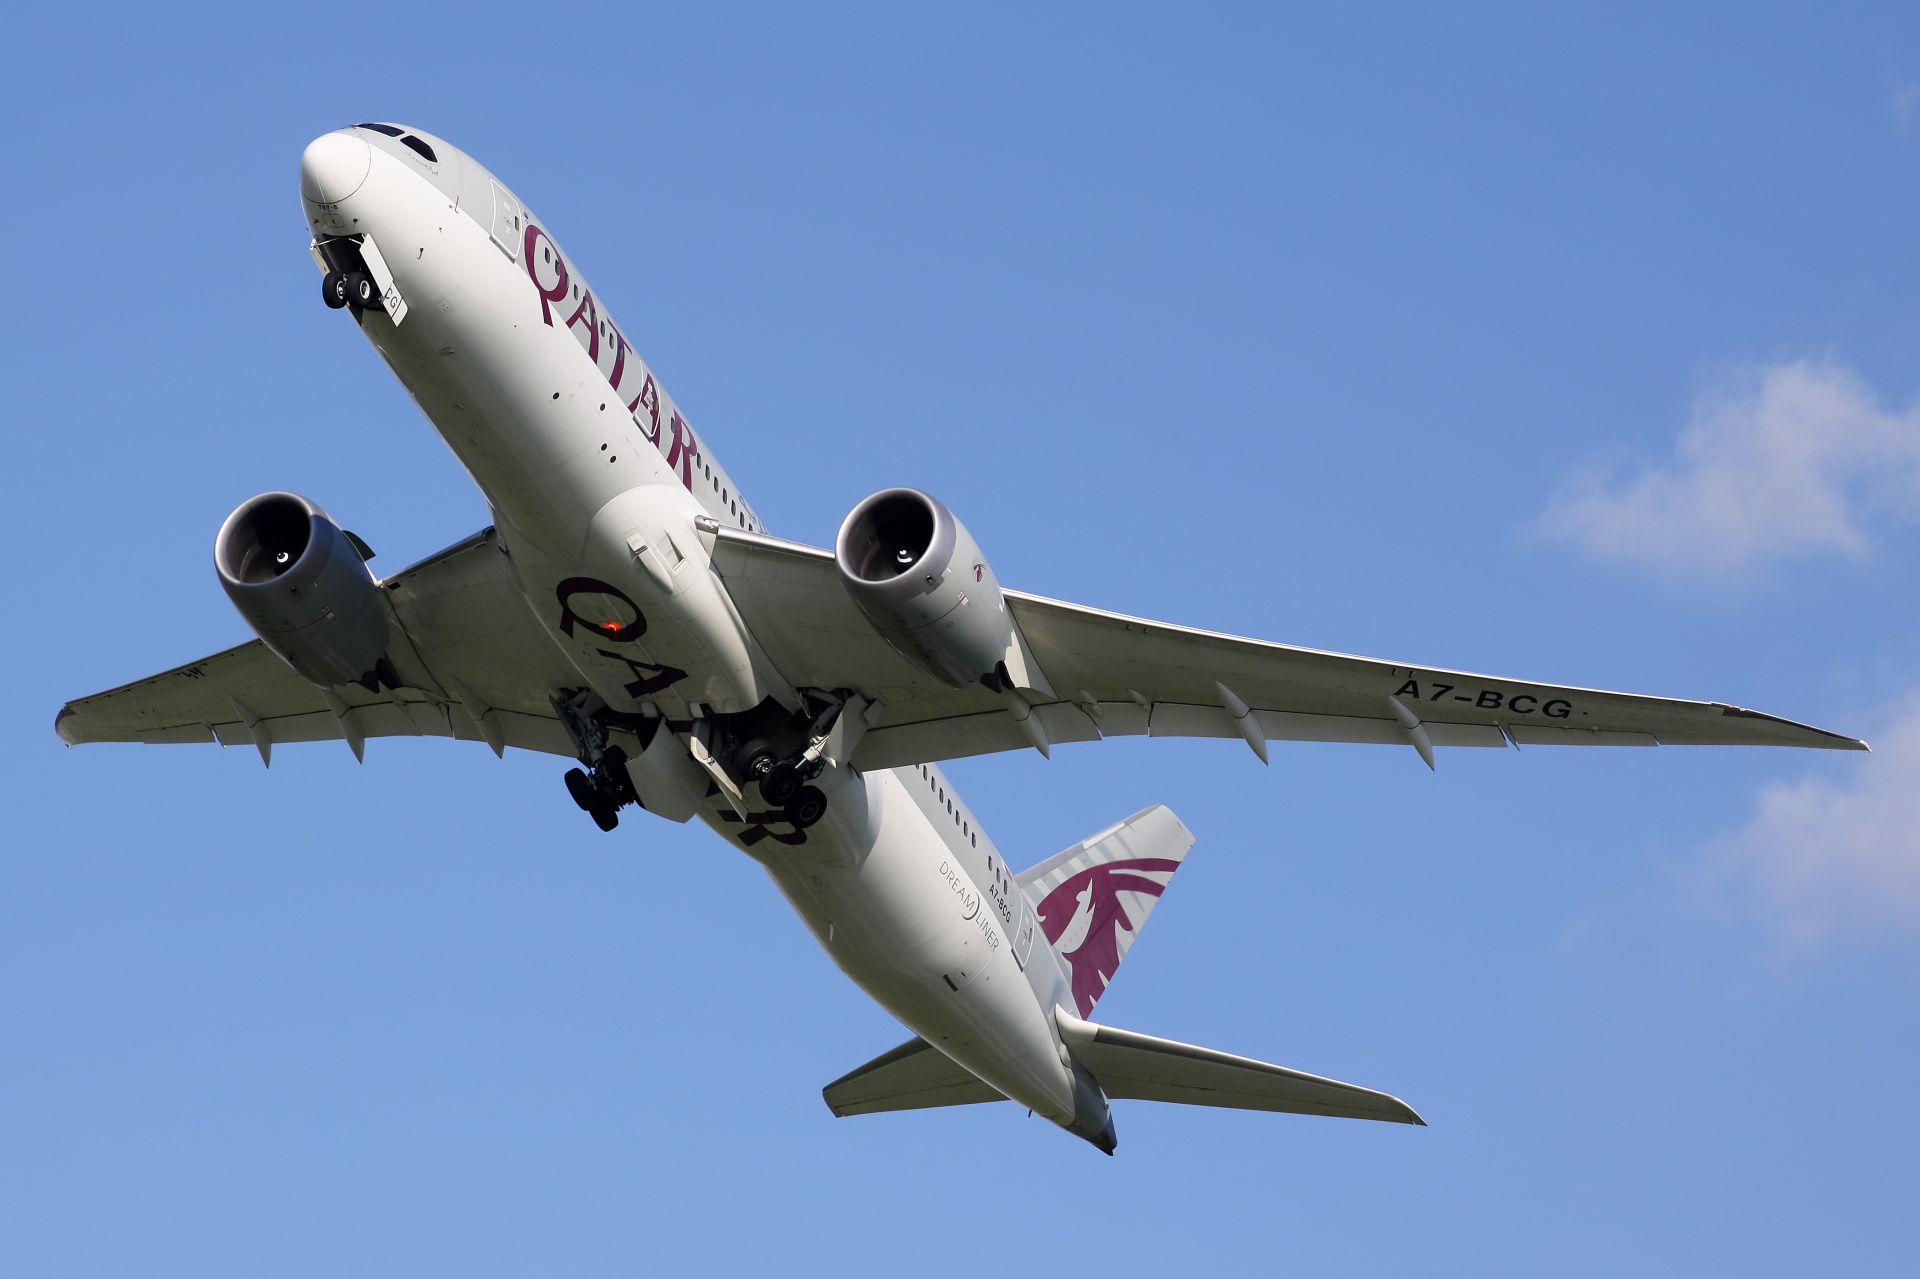 A7-BCG (Aircraft » EPWA Spotting » Boeing 787-8 Dreamliner » Qatar Airways)